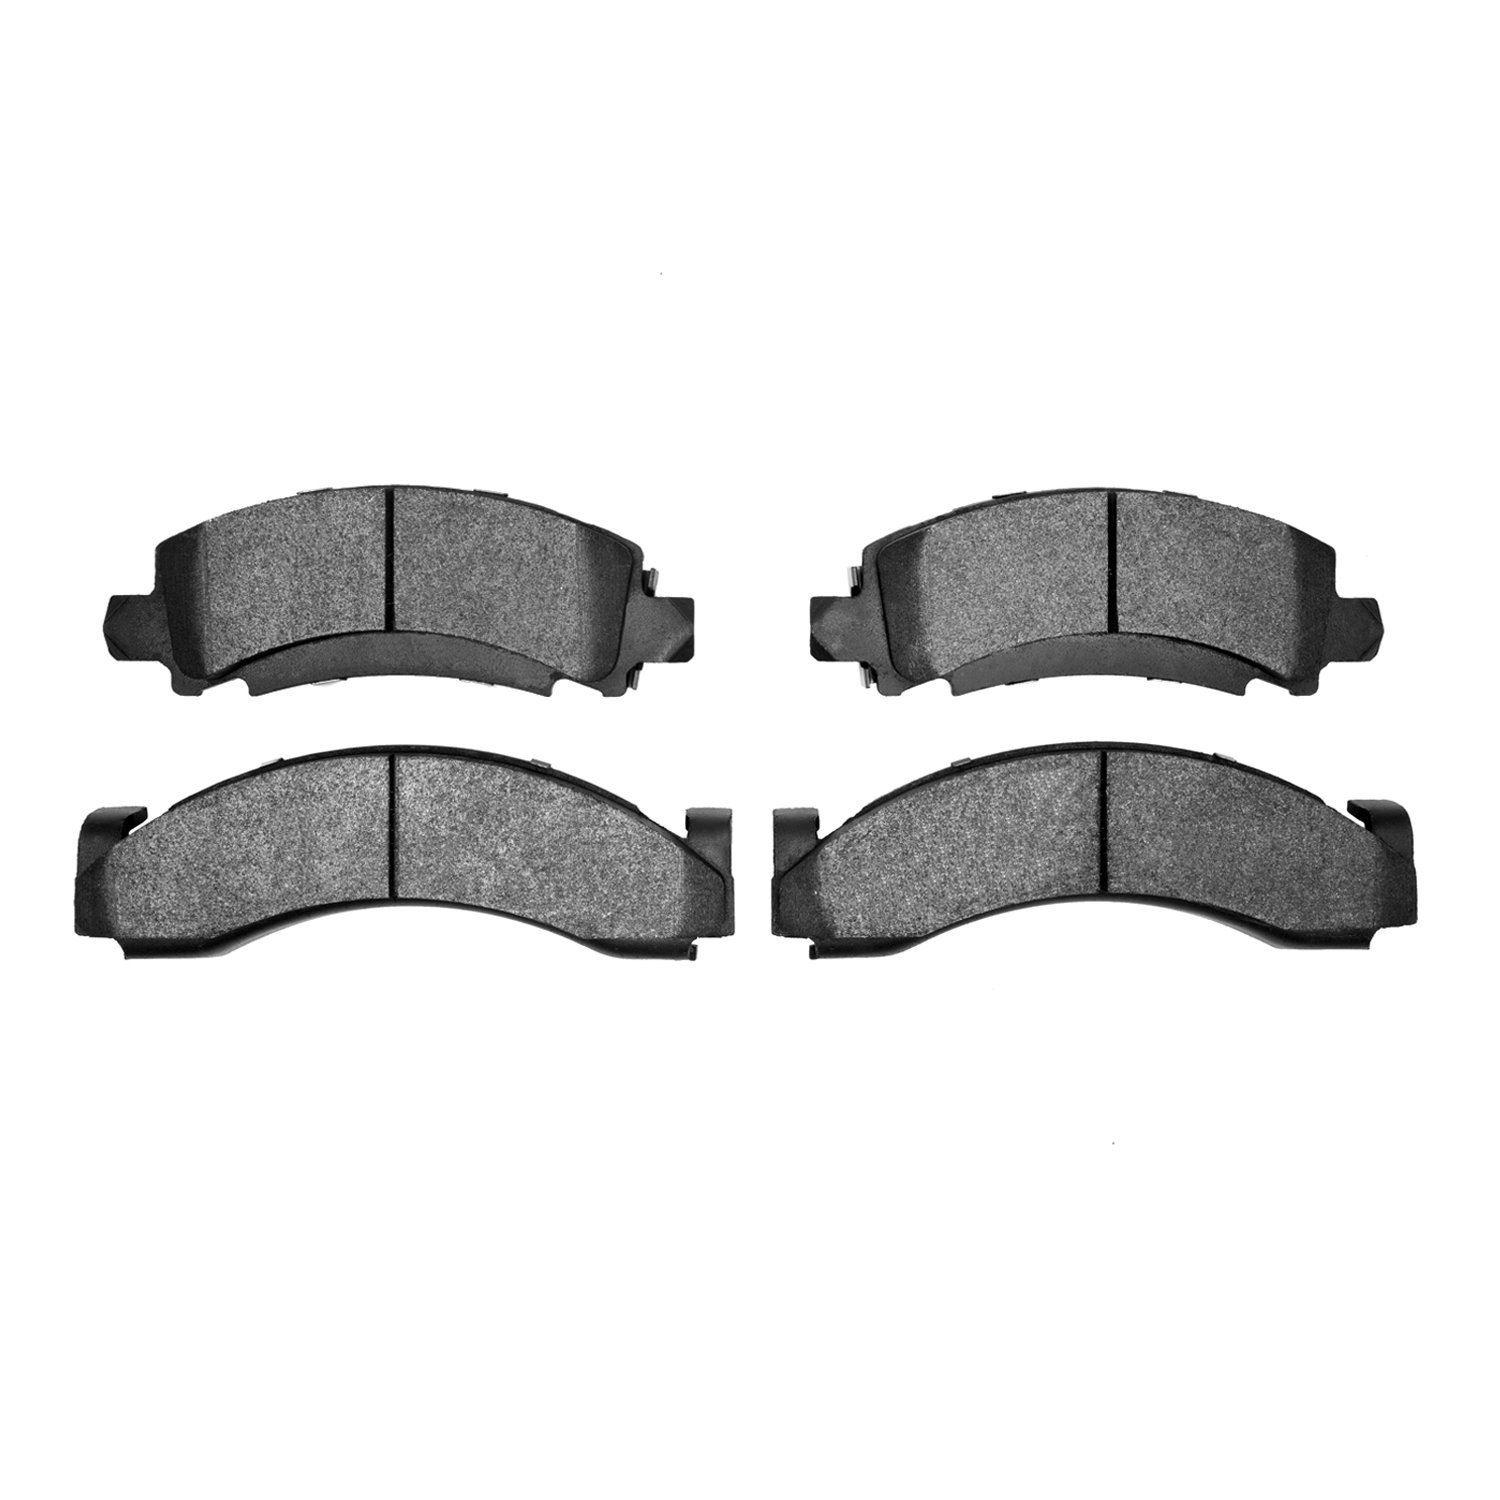 Semi-Metallic Brake Pads, 1971-2006 Fits Multiple Makes/Models, Position: Front & Rear